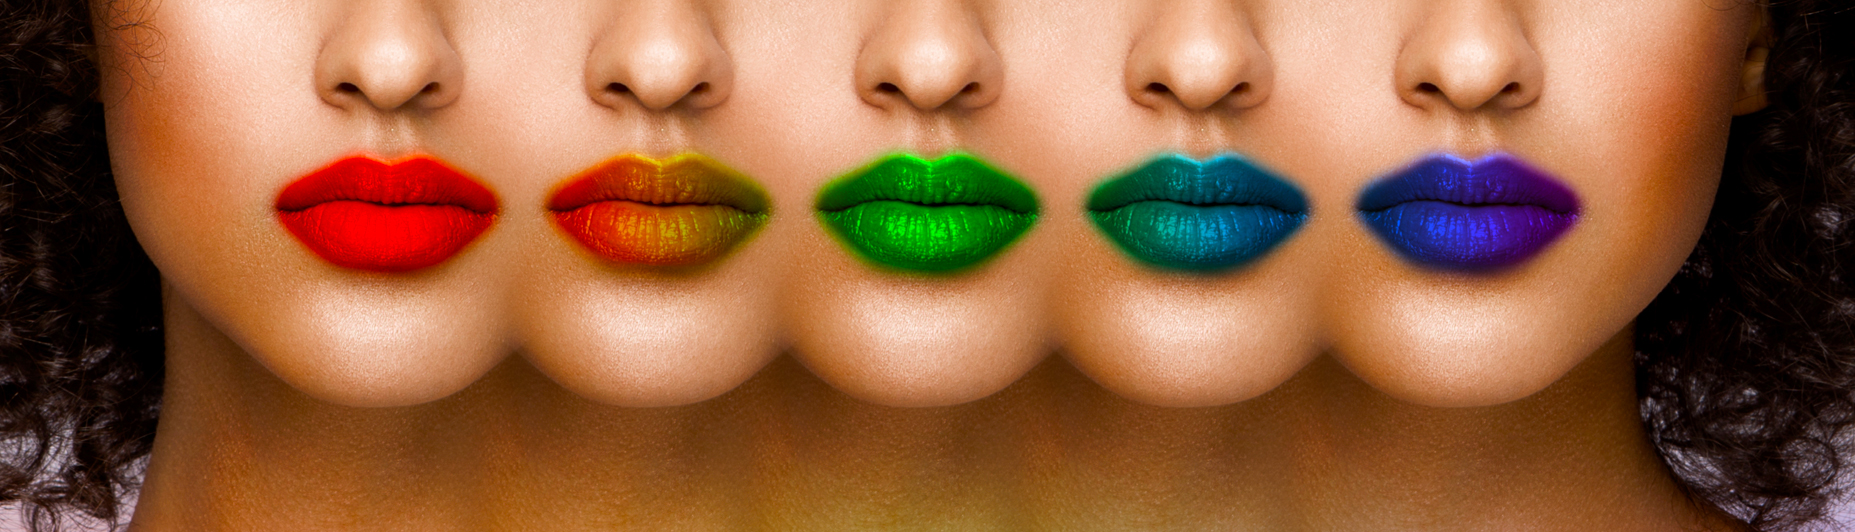 rainbow lipstick applied in Photoshop